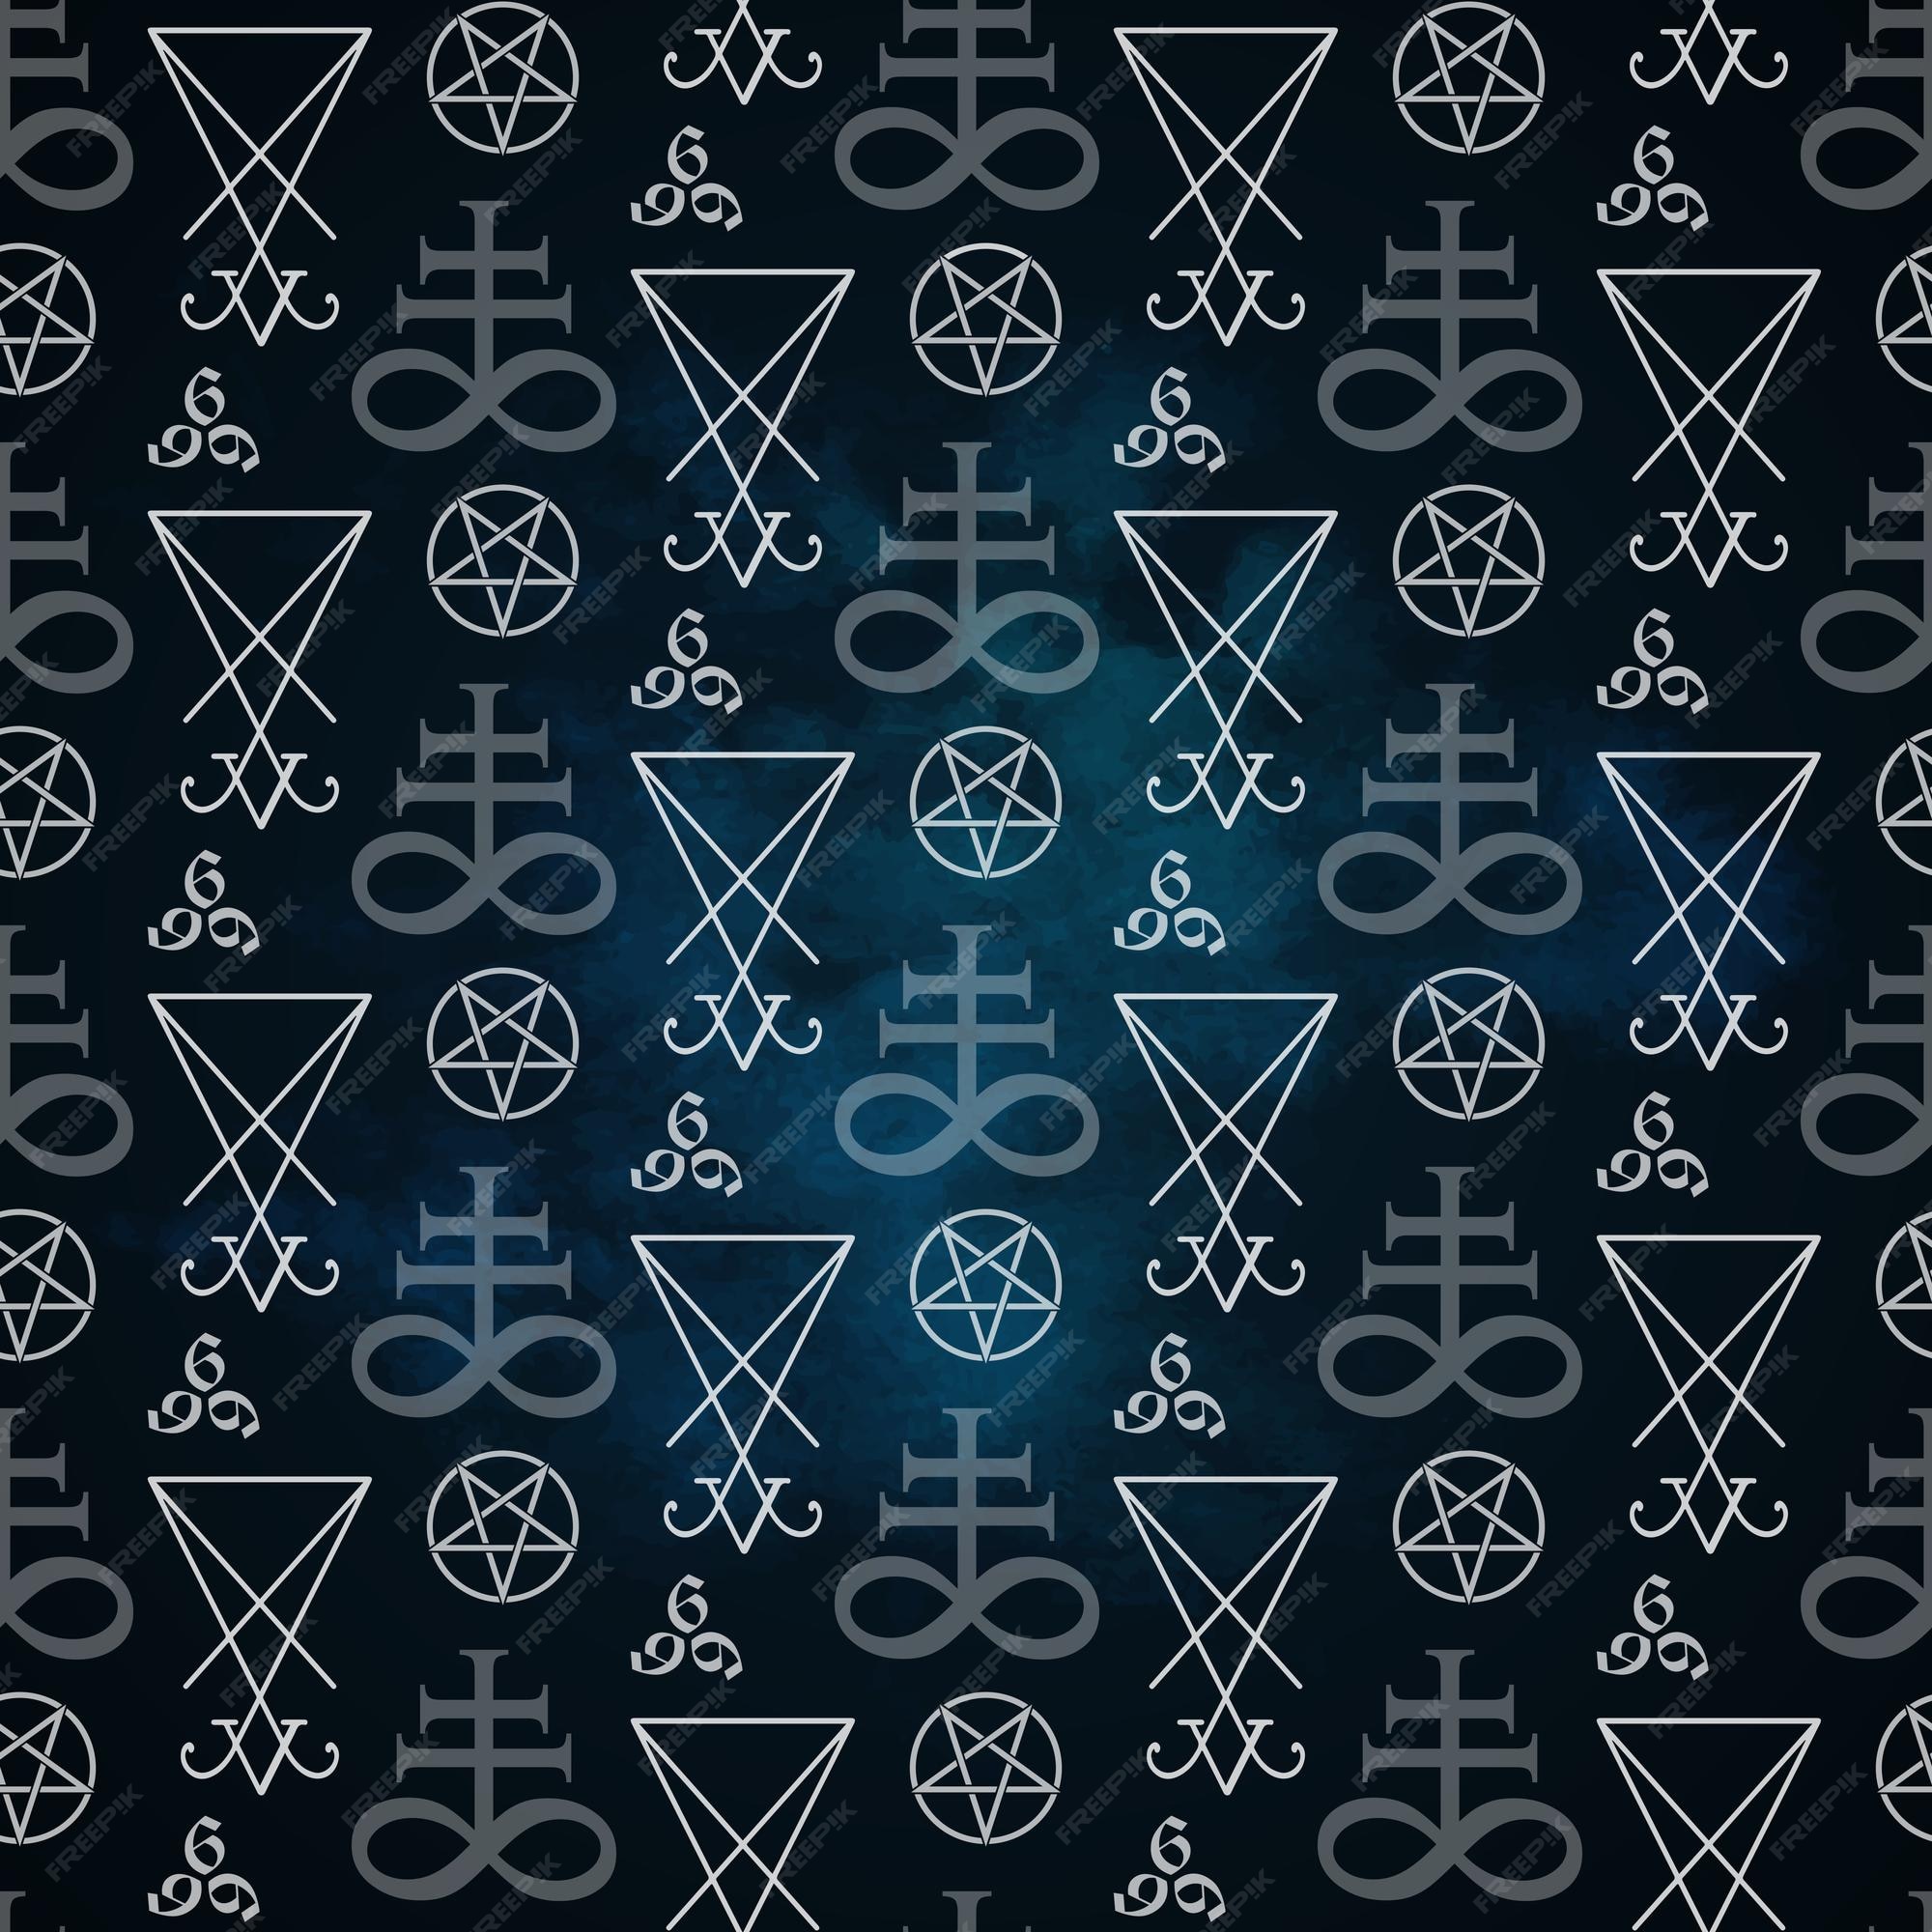 Premium Vector | Seamless pattern occult symbols leviathan cross pentagram  lucifer sigil and 666 vector illustration